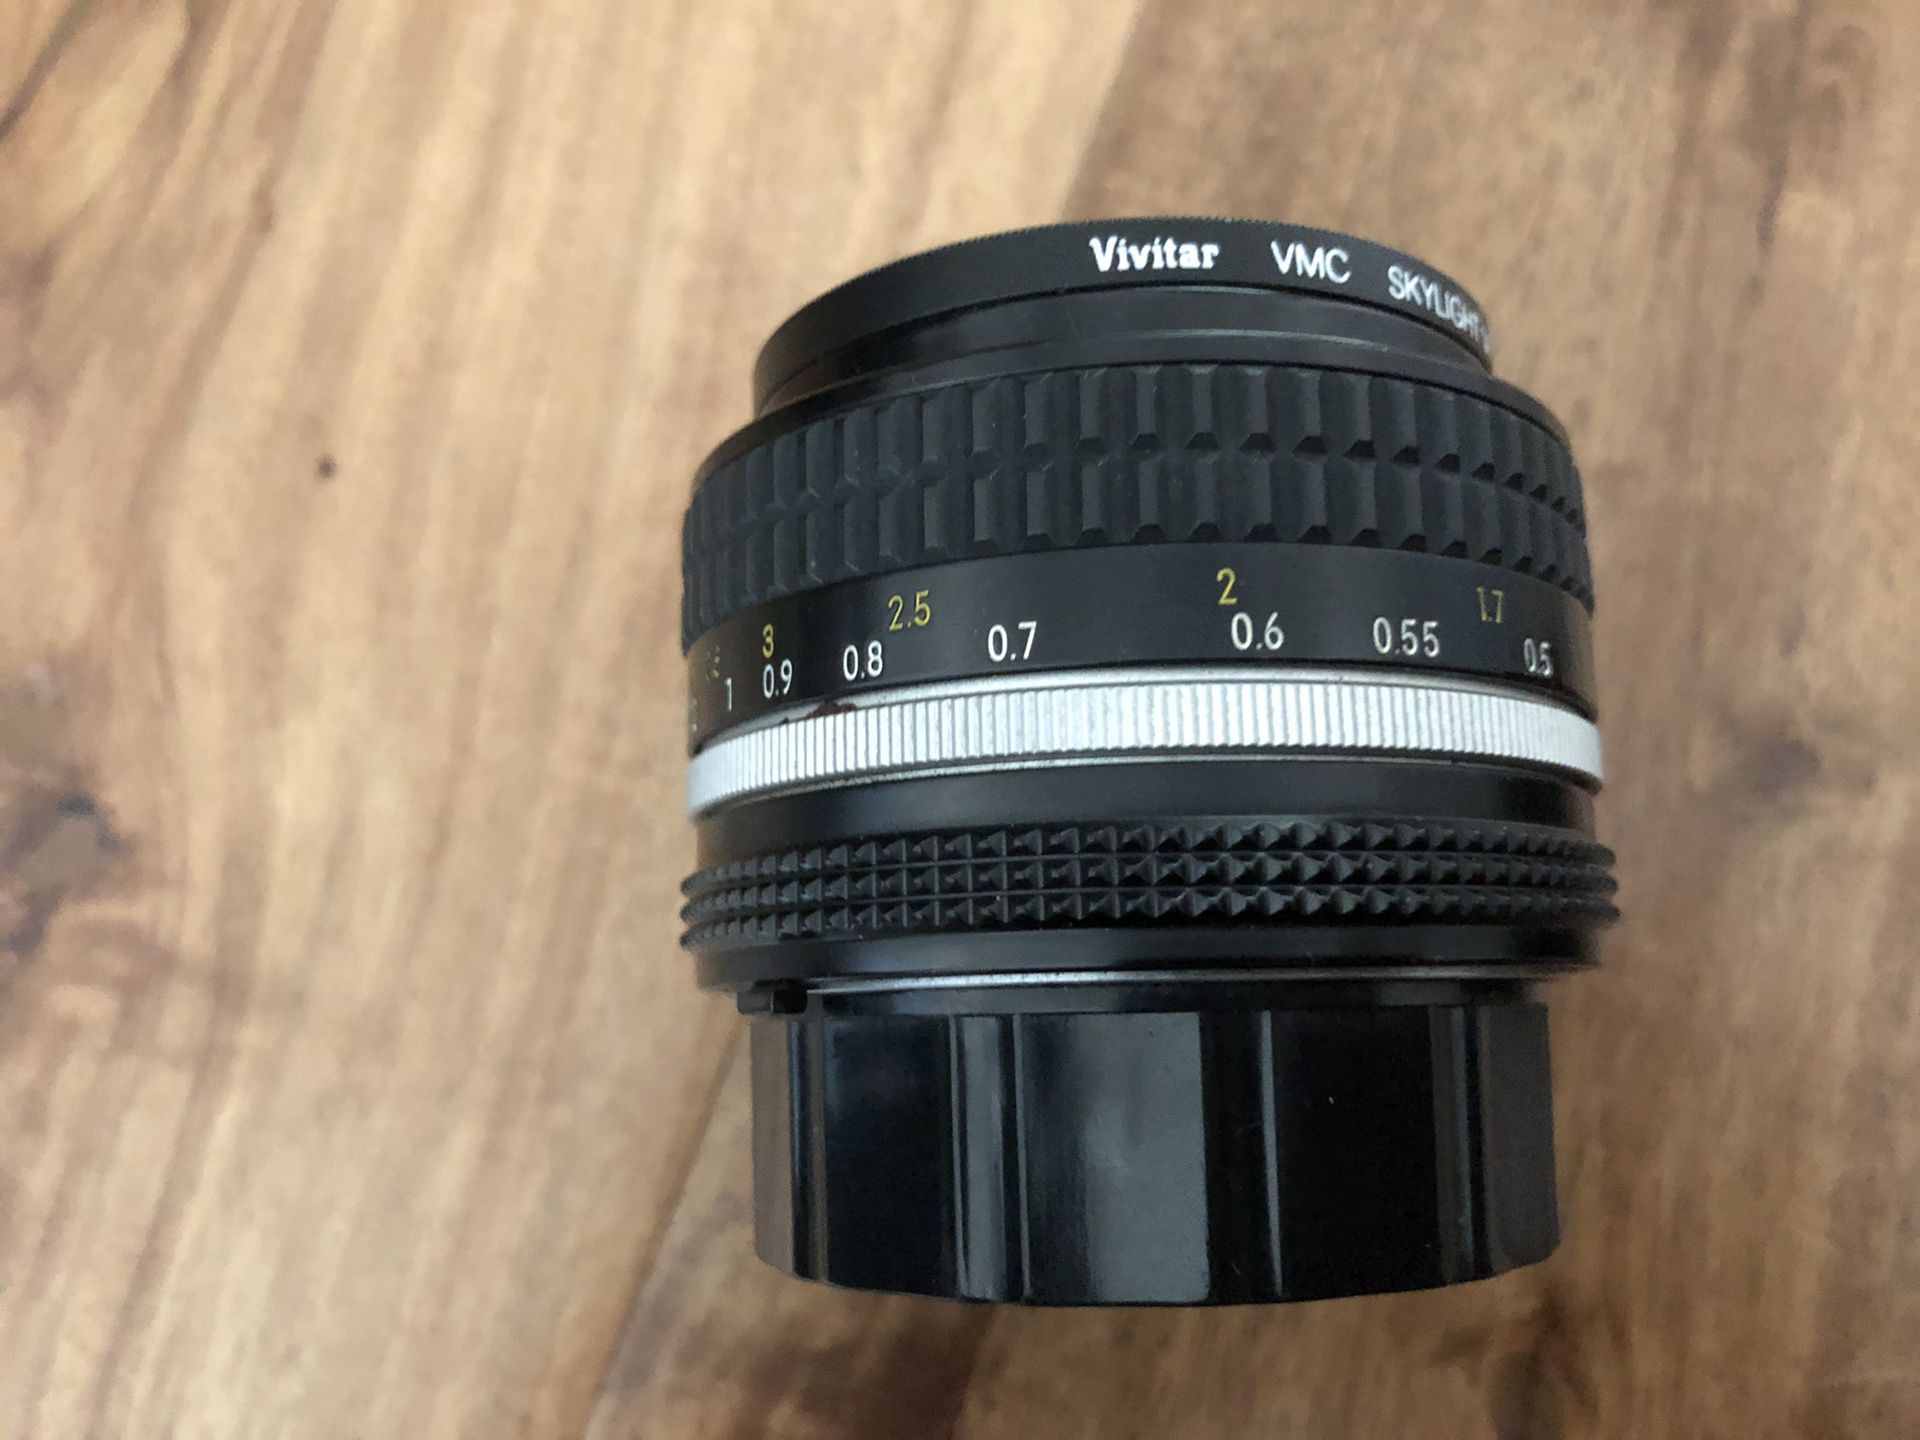 Nikon/kenlock manual lenses